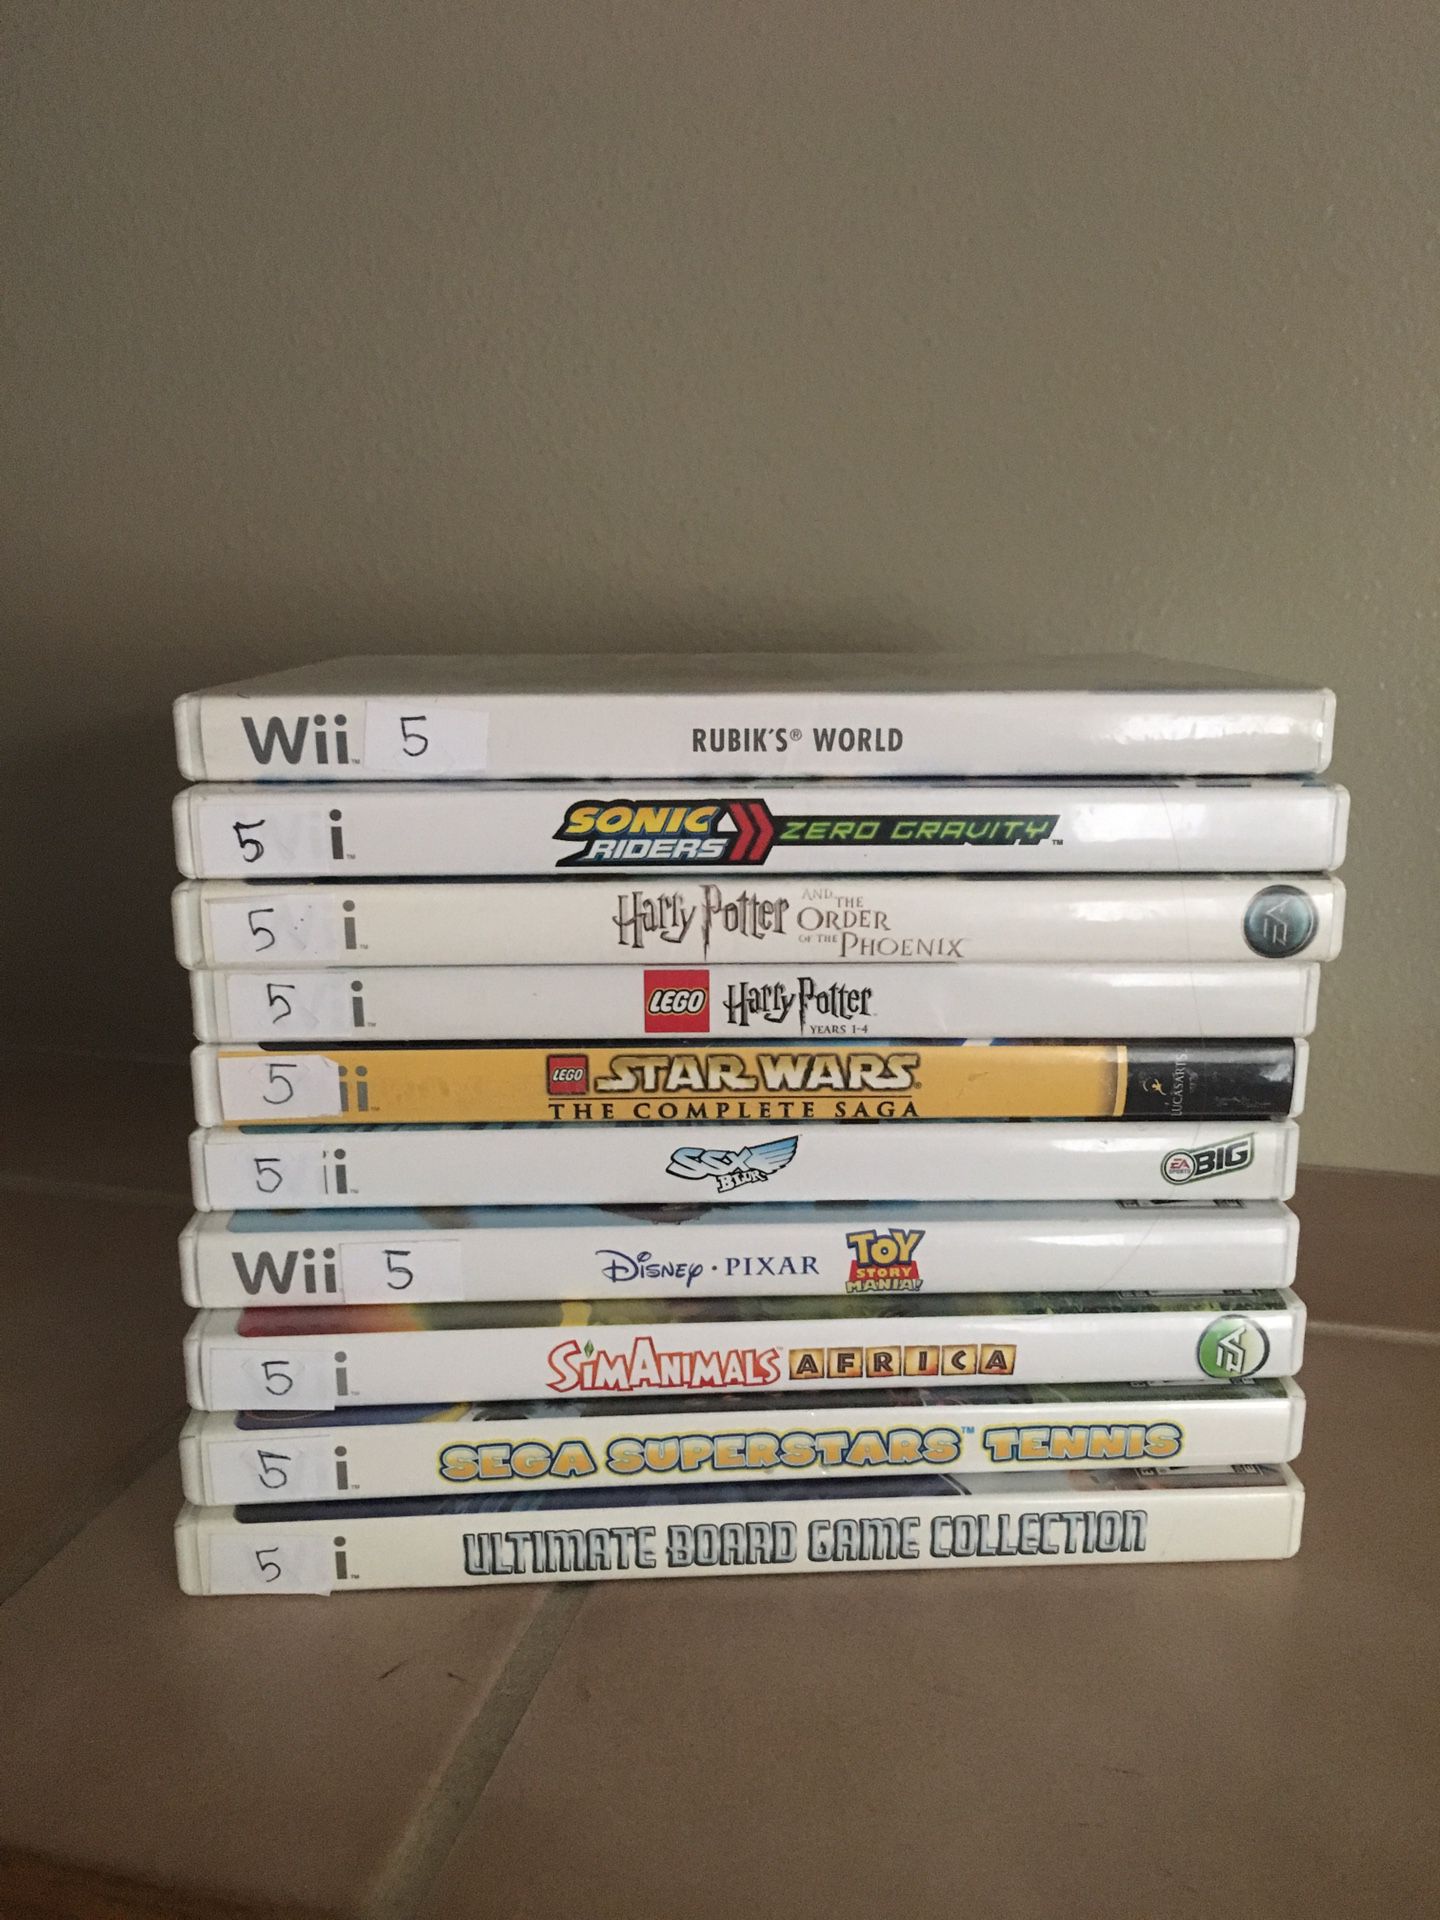 10 Wii games